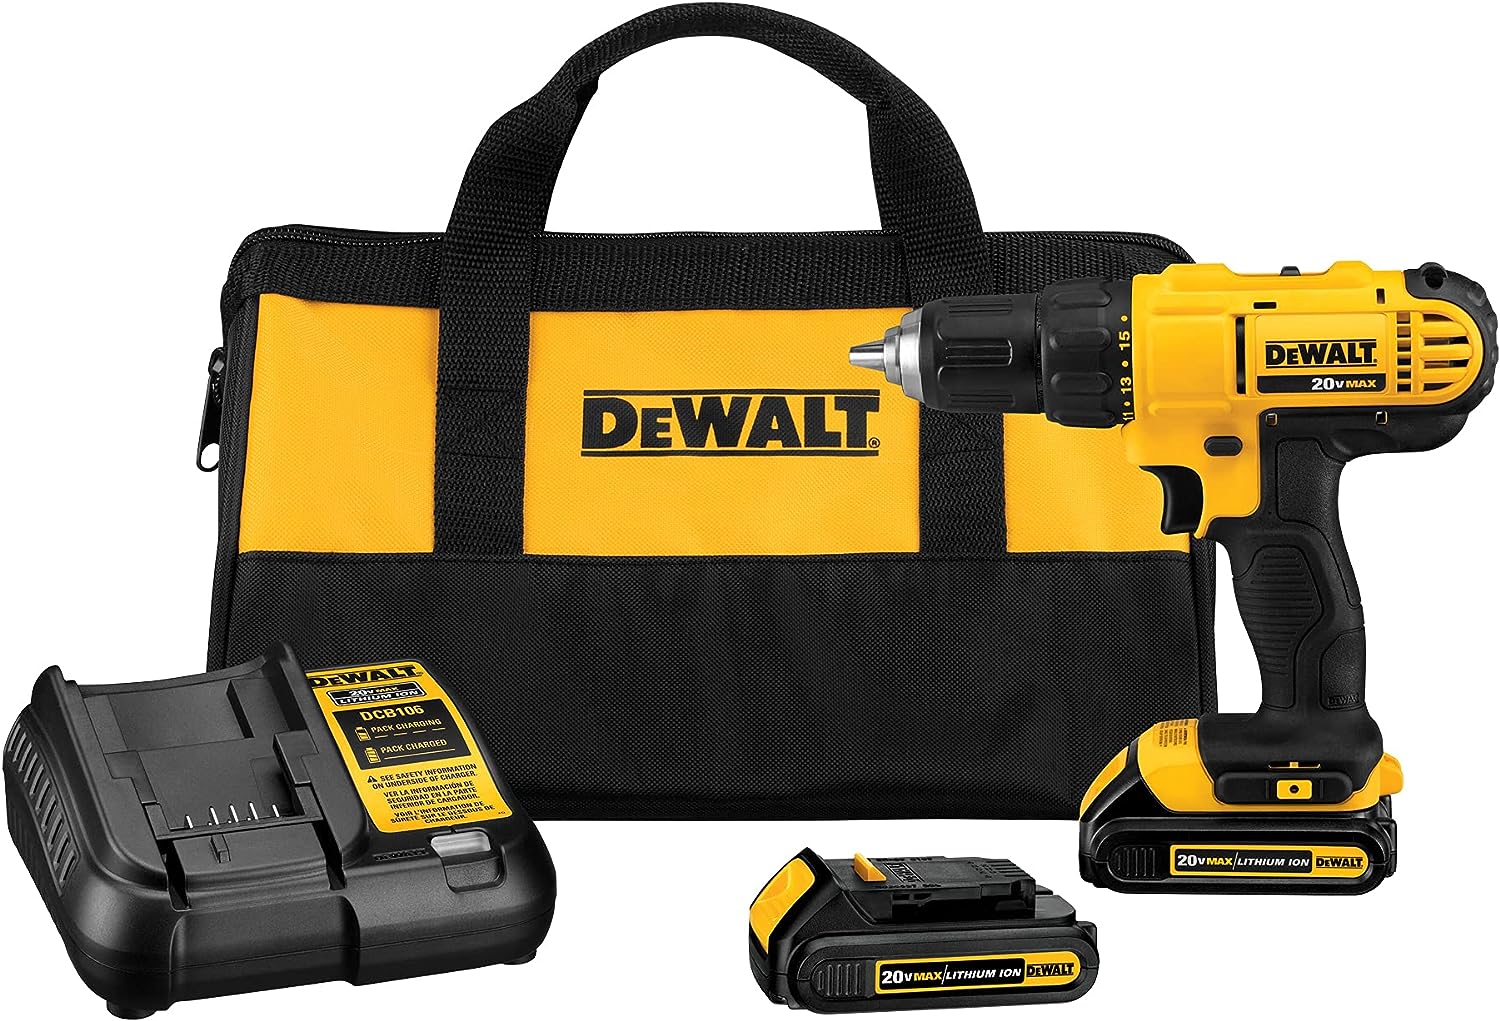 DEWALT 20V Max Cordless Drill/Driver Kit, Compact, 1/2-Inch (DCD771C2), Yellow